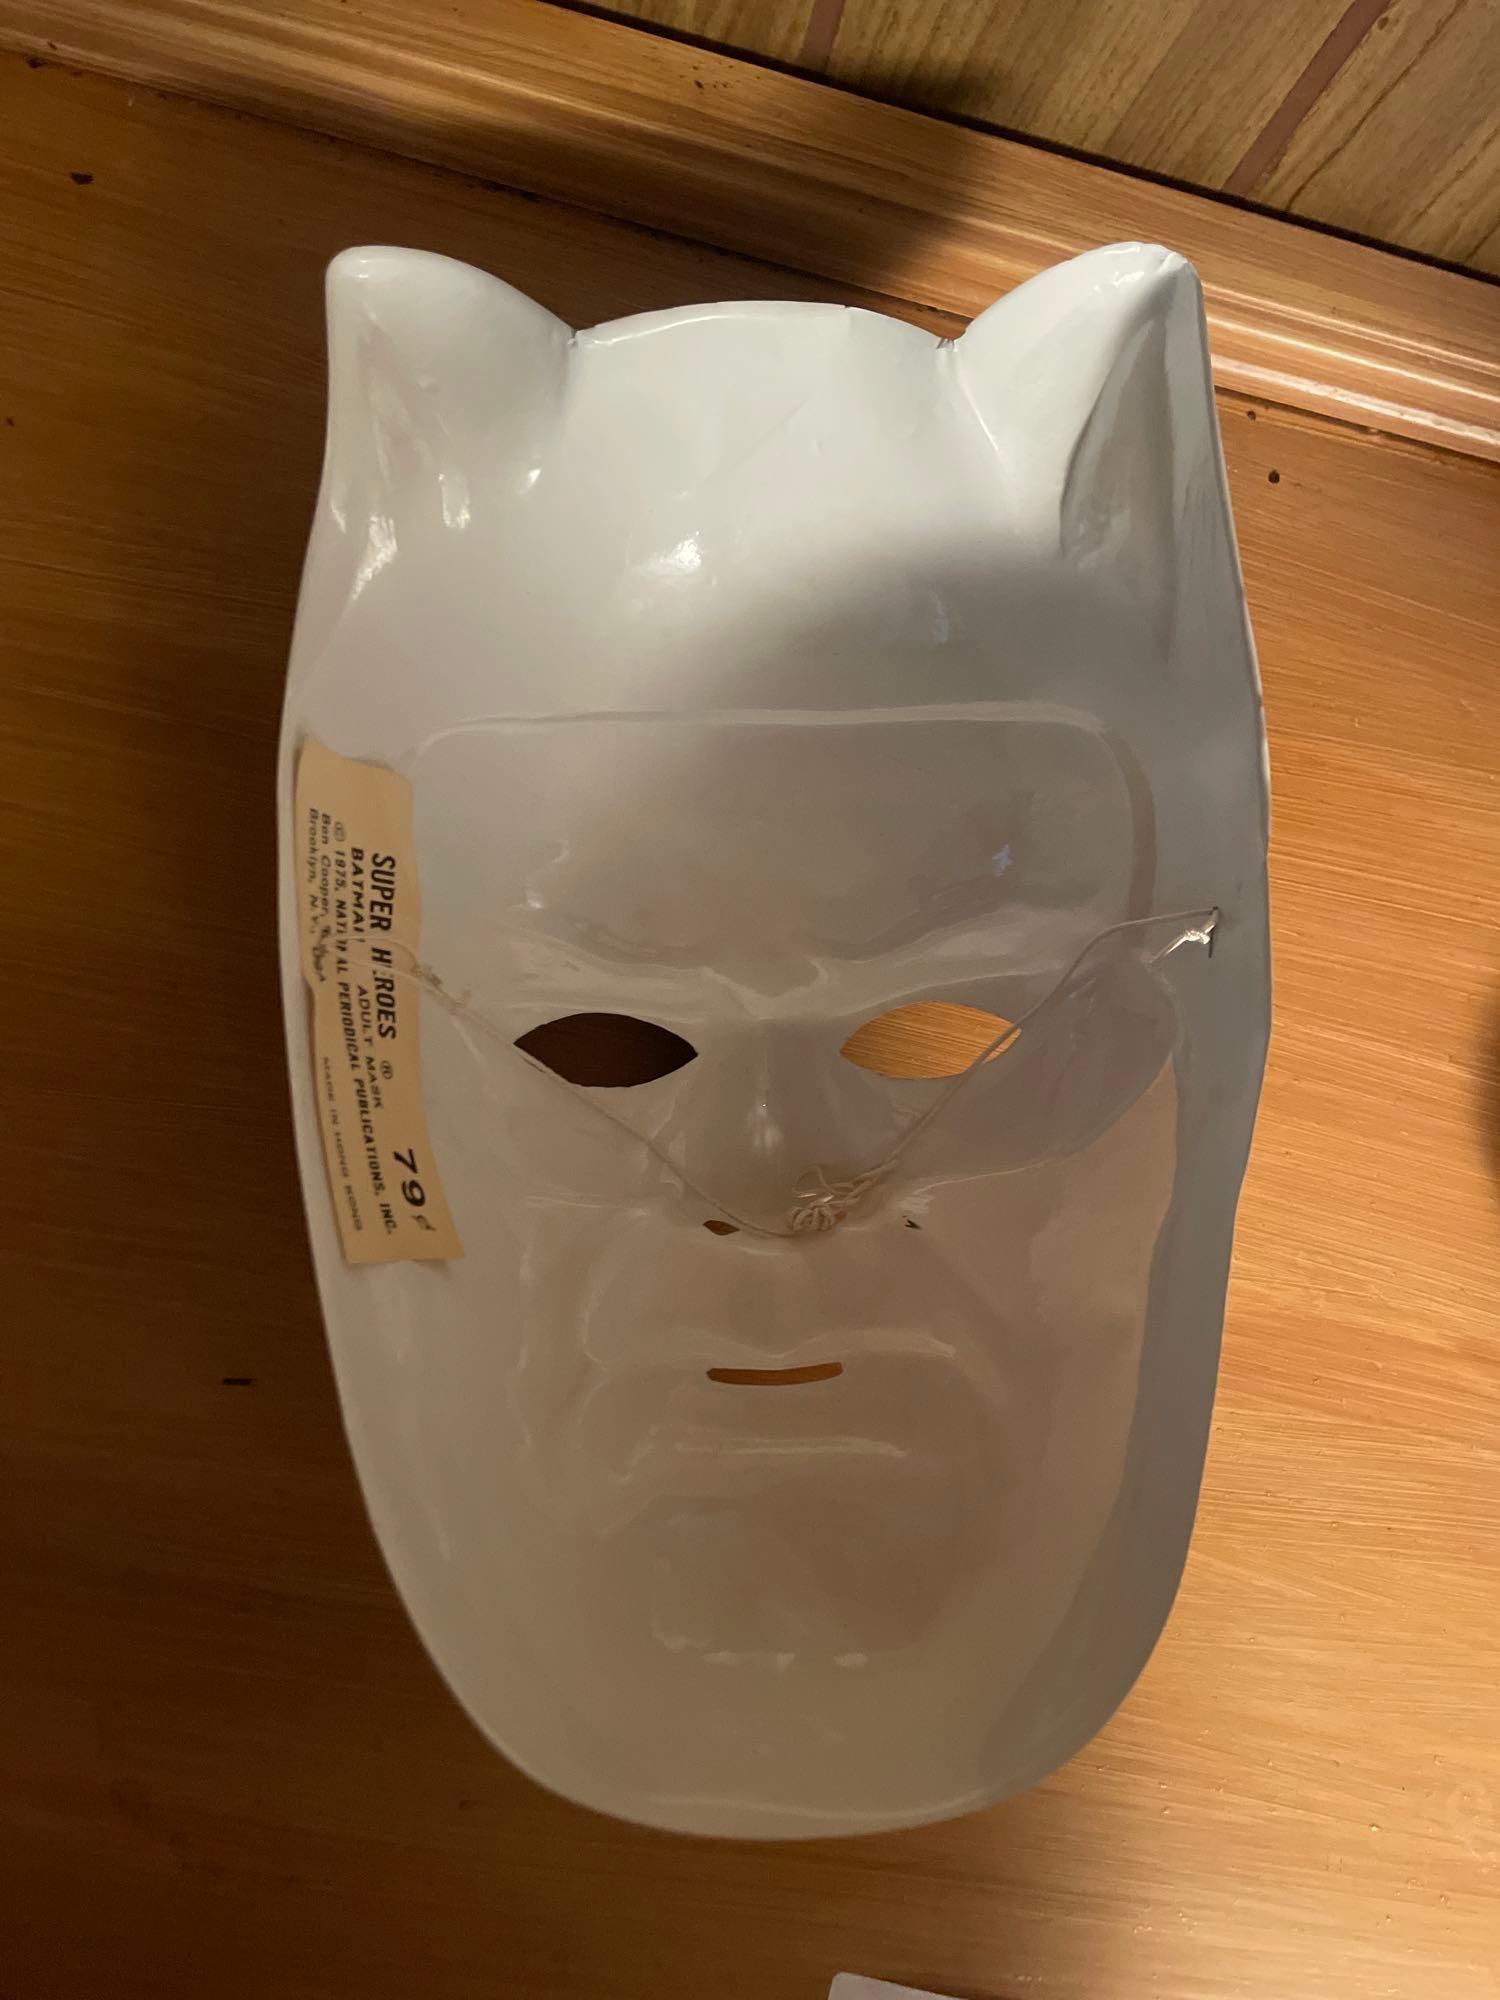 1975 Batman Mask